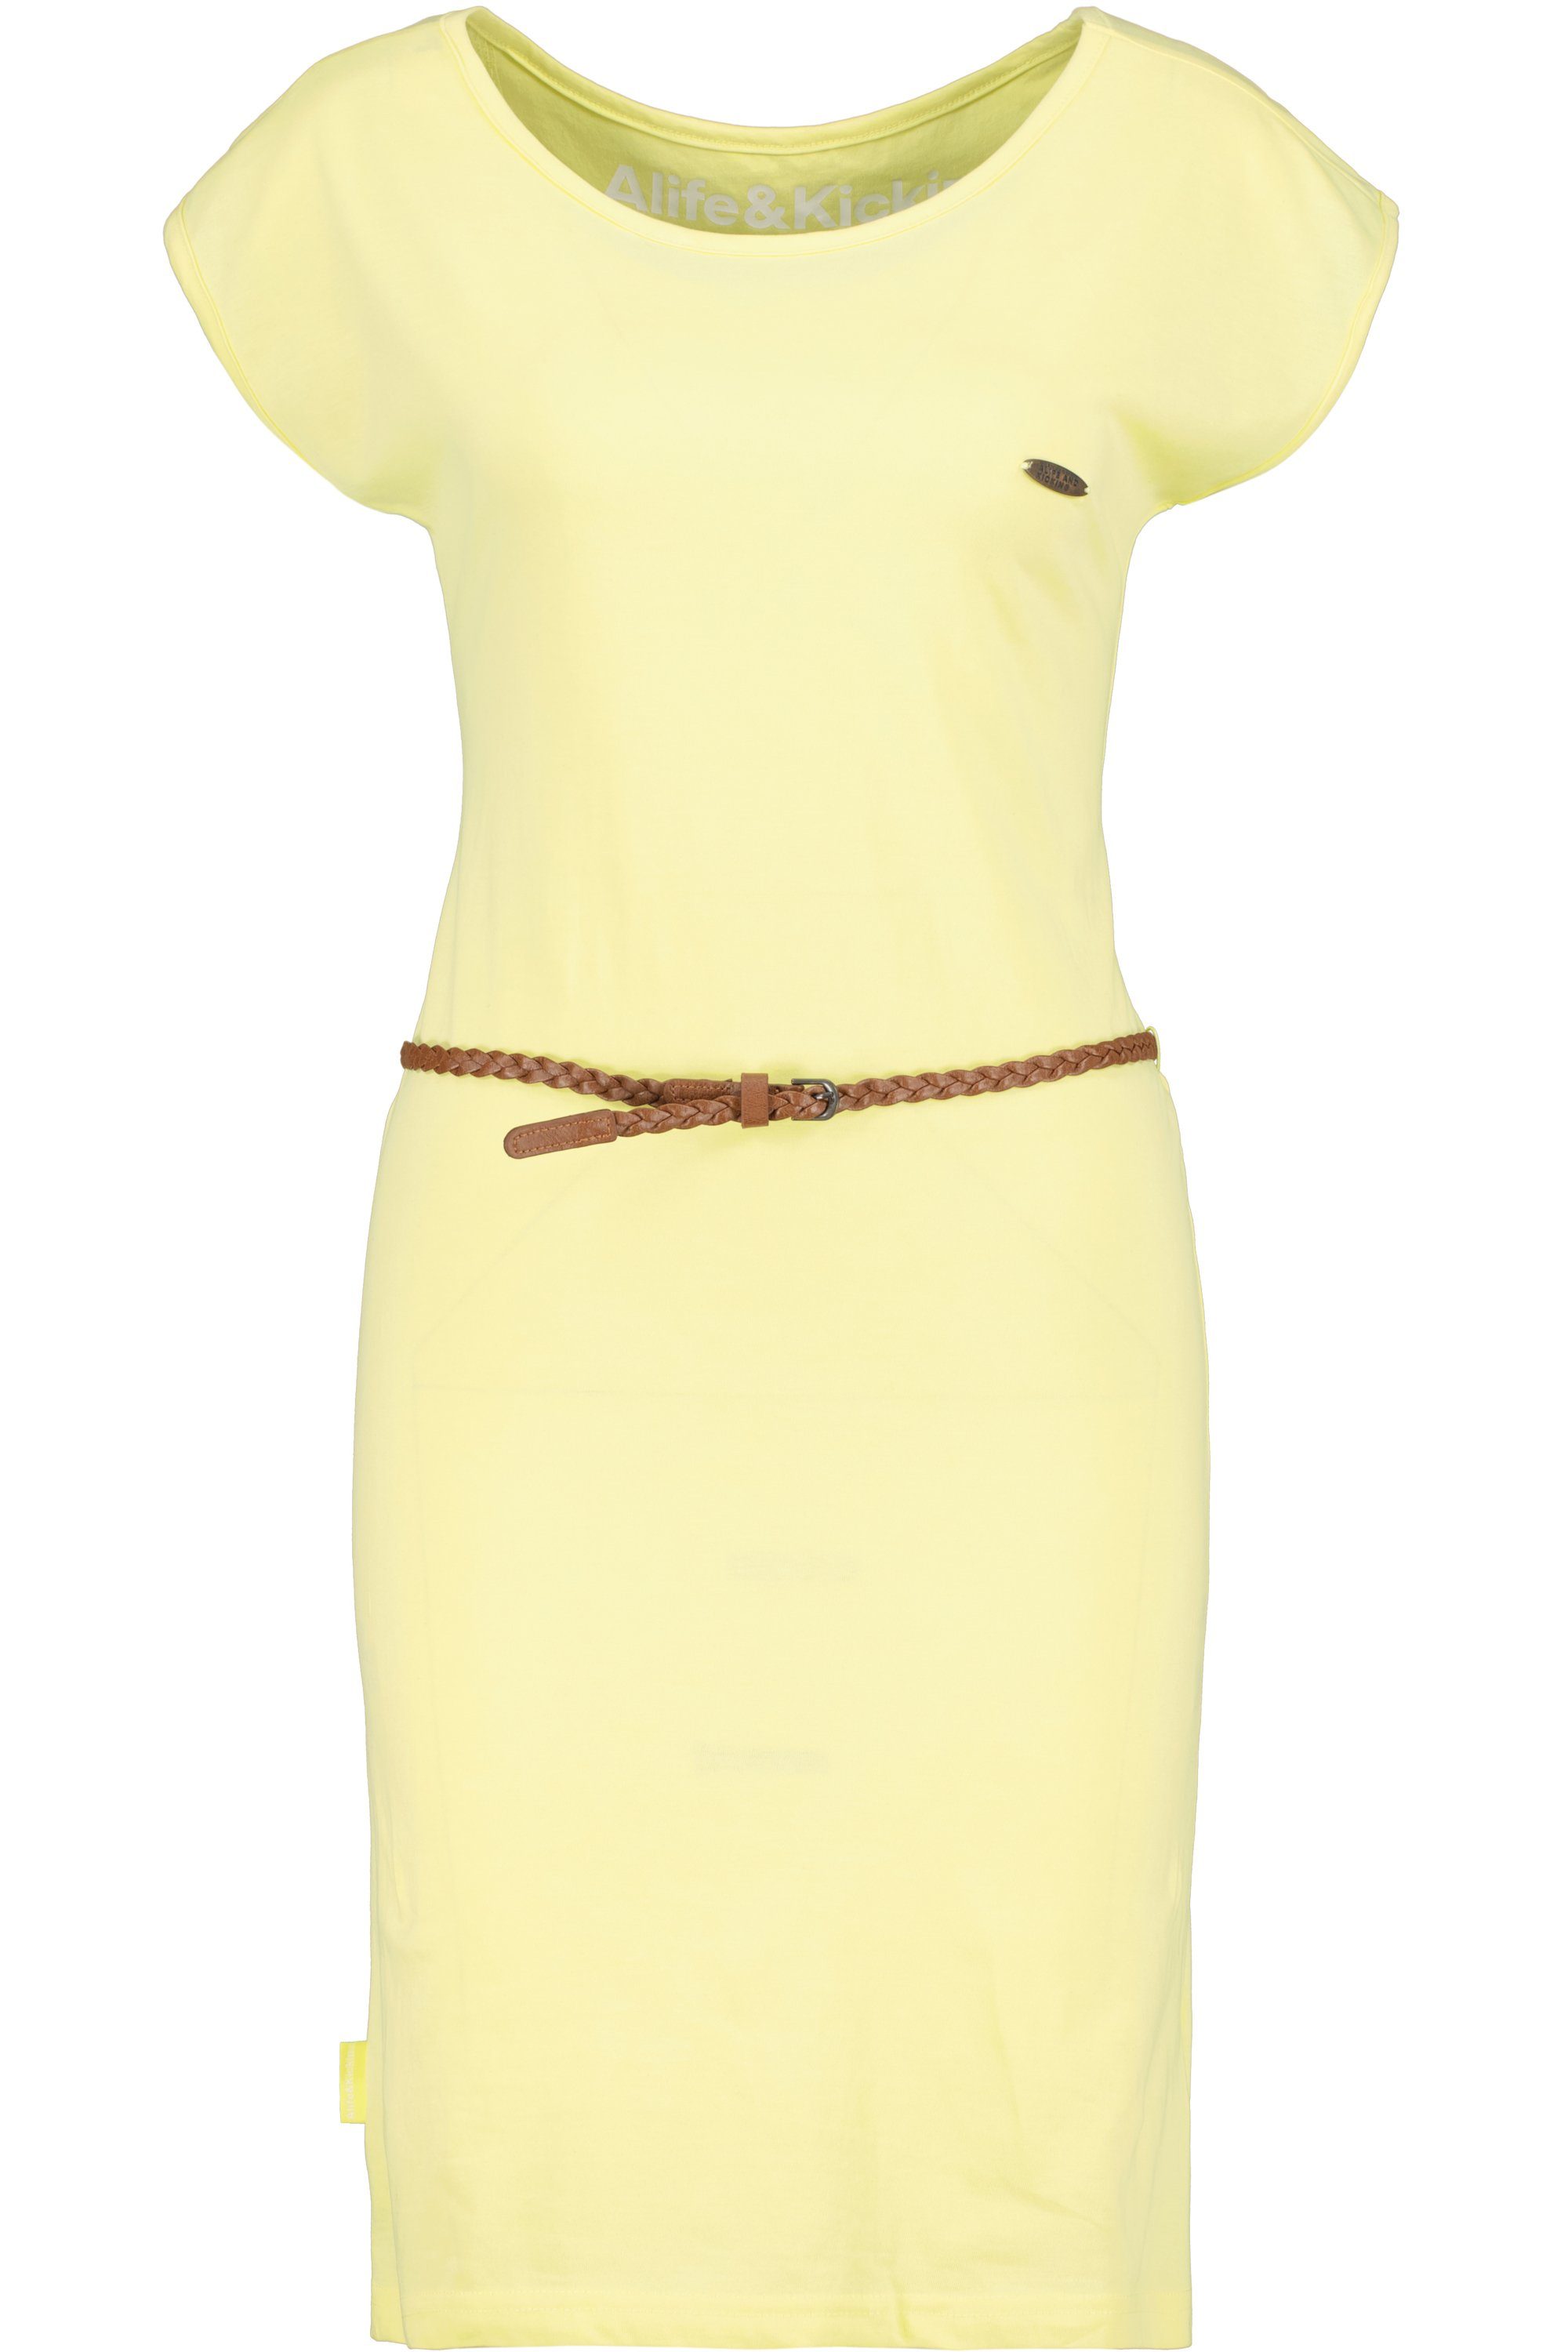 Alife & Kickin Blusenkleid lemonade Kleid Damen Dress Sommerkleid, ElliAK